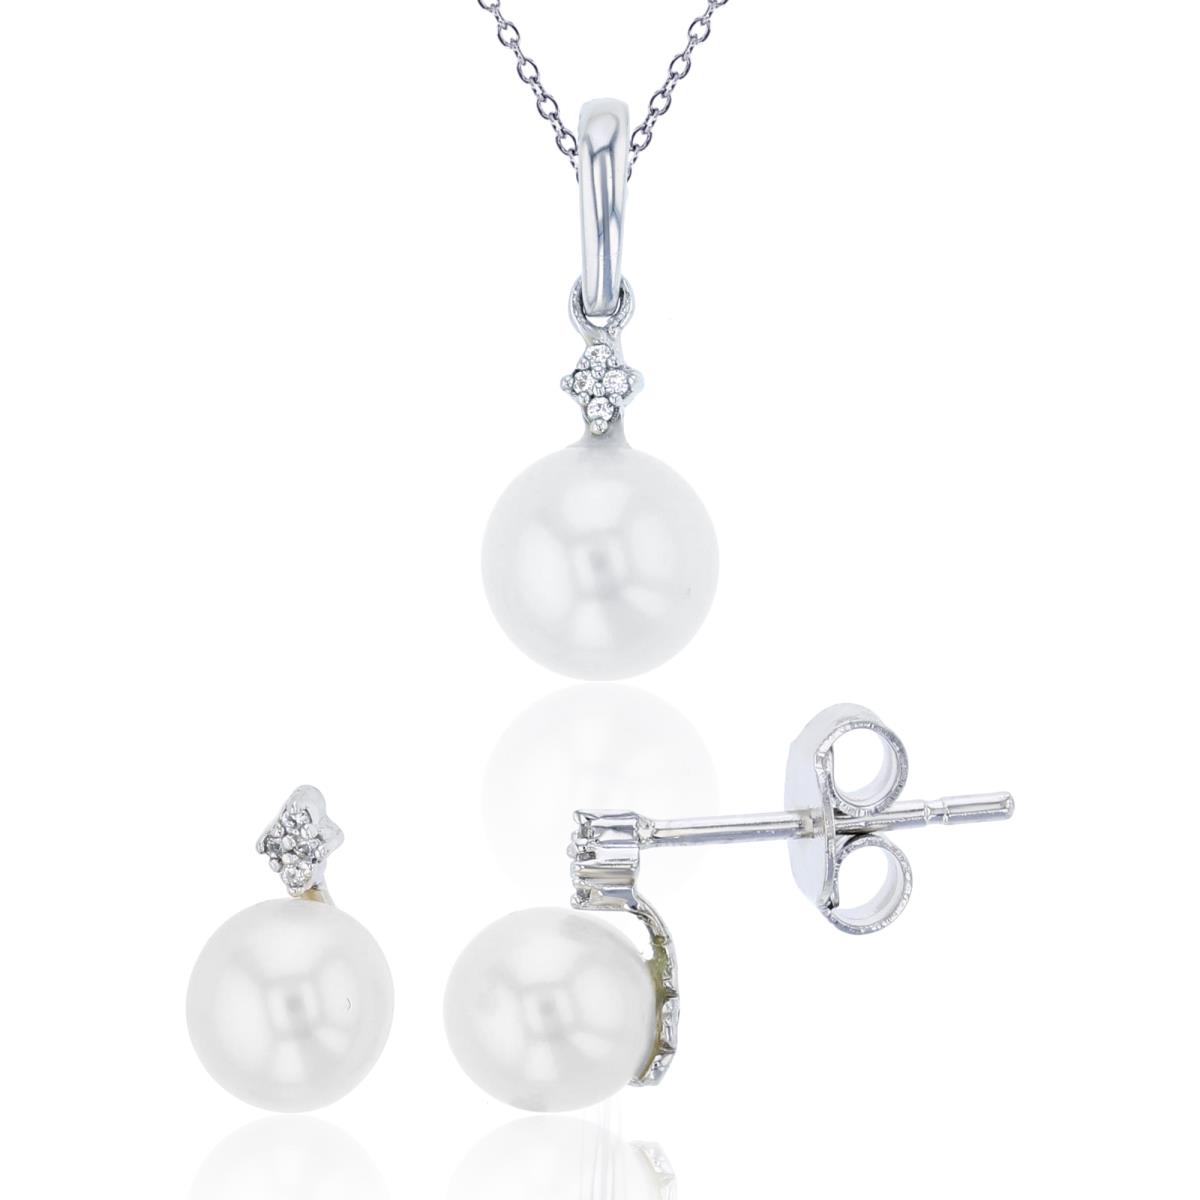 10K White Gold 0.03 CTTW Diamond & Rnd Pearl 18" Necklace/Earring Set